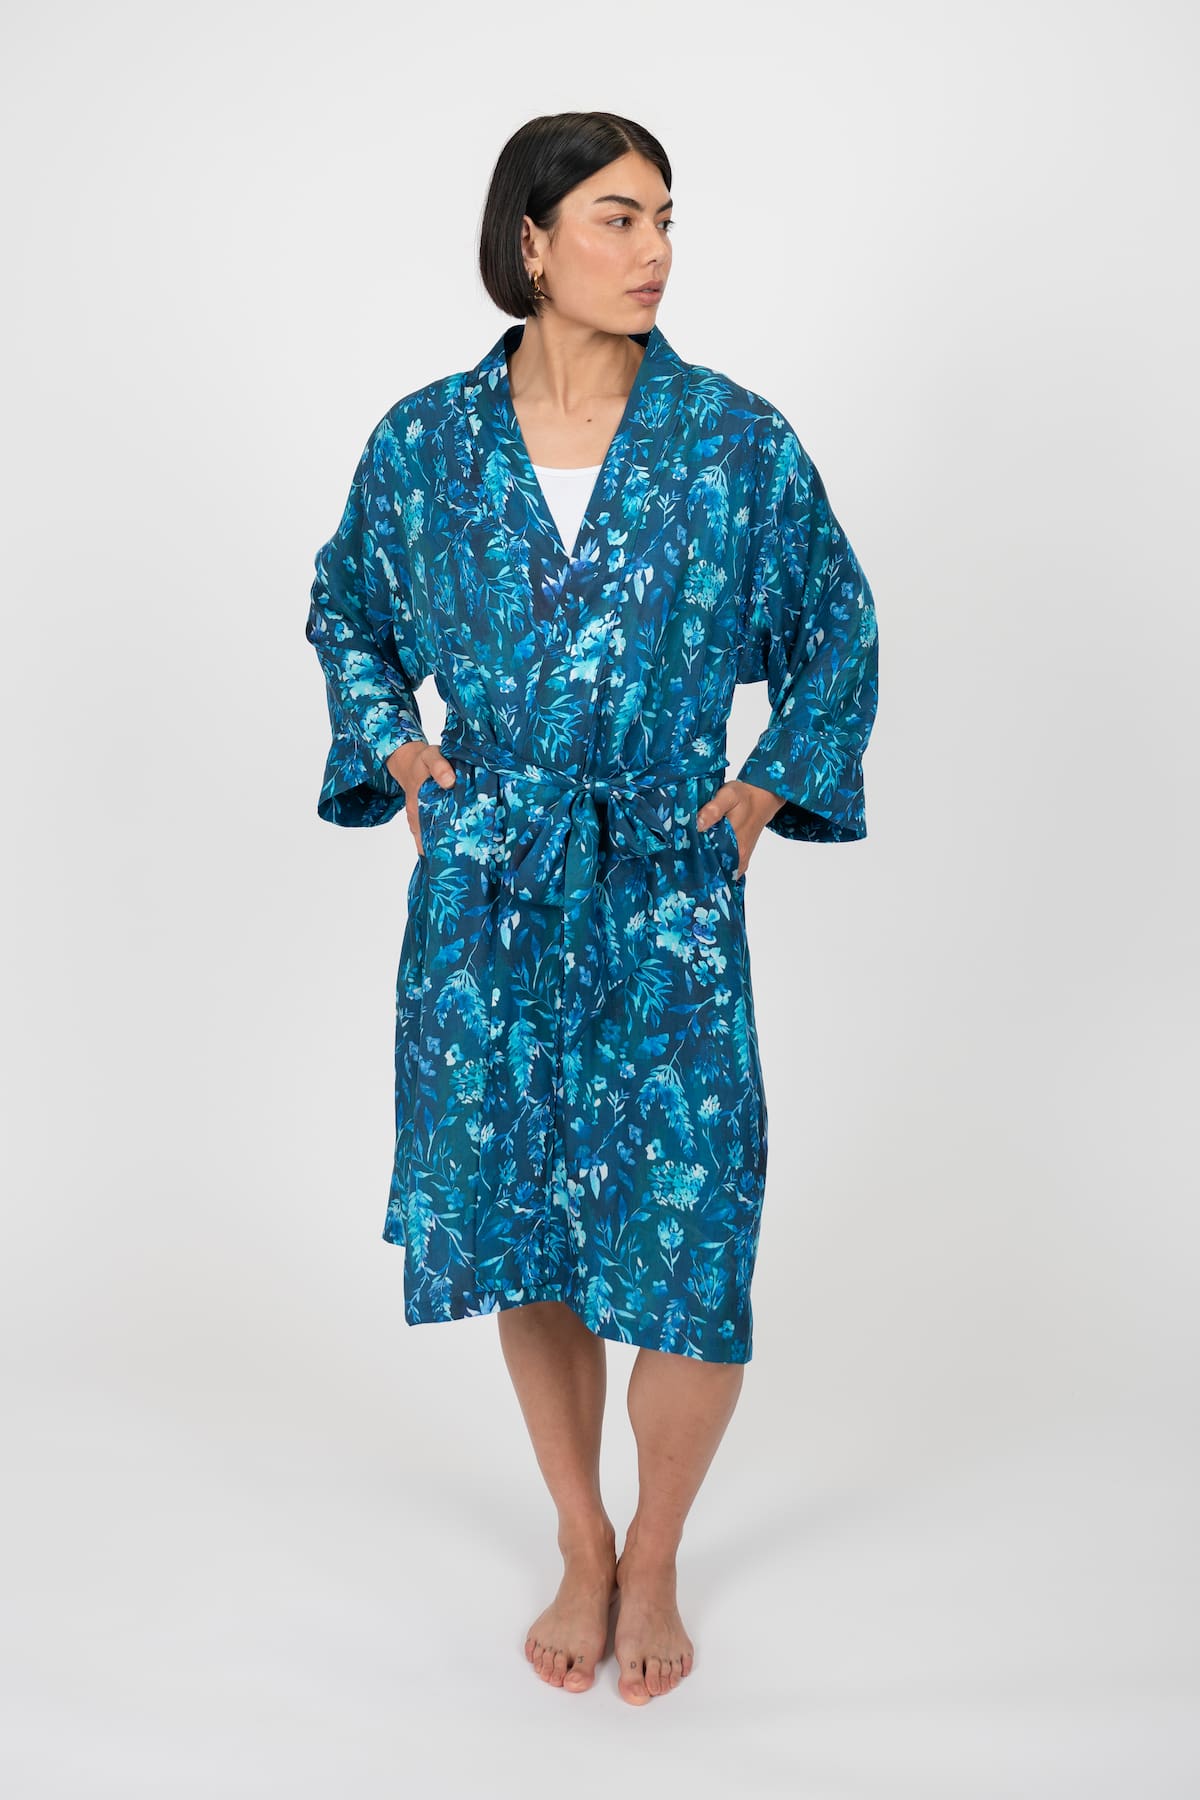 Cerulean Dream Kimono Robe - Front Main 2 - Luxury Kimono Robes - Orchard Moon